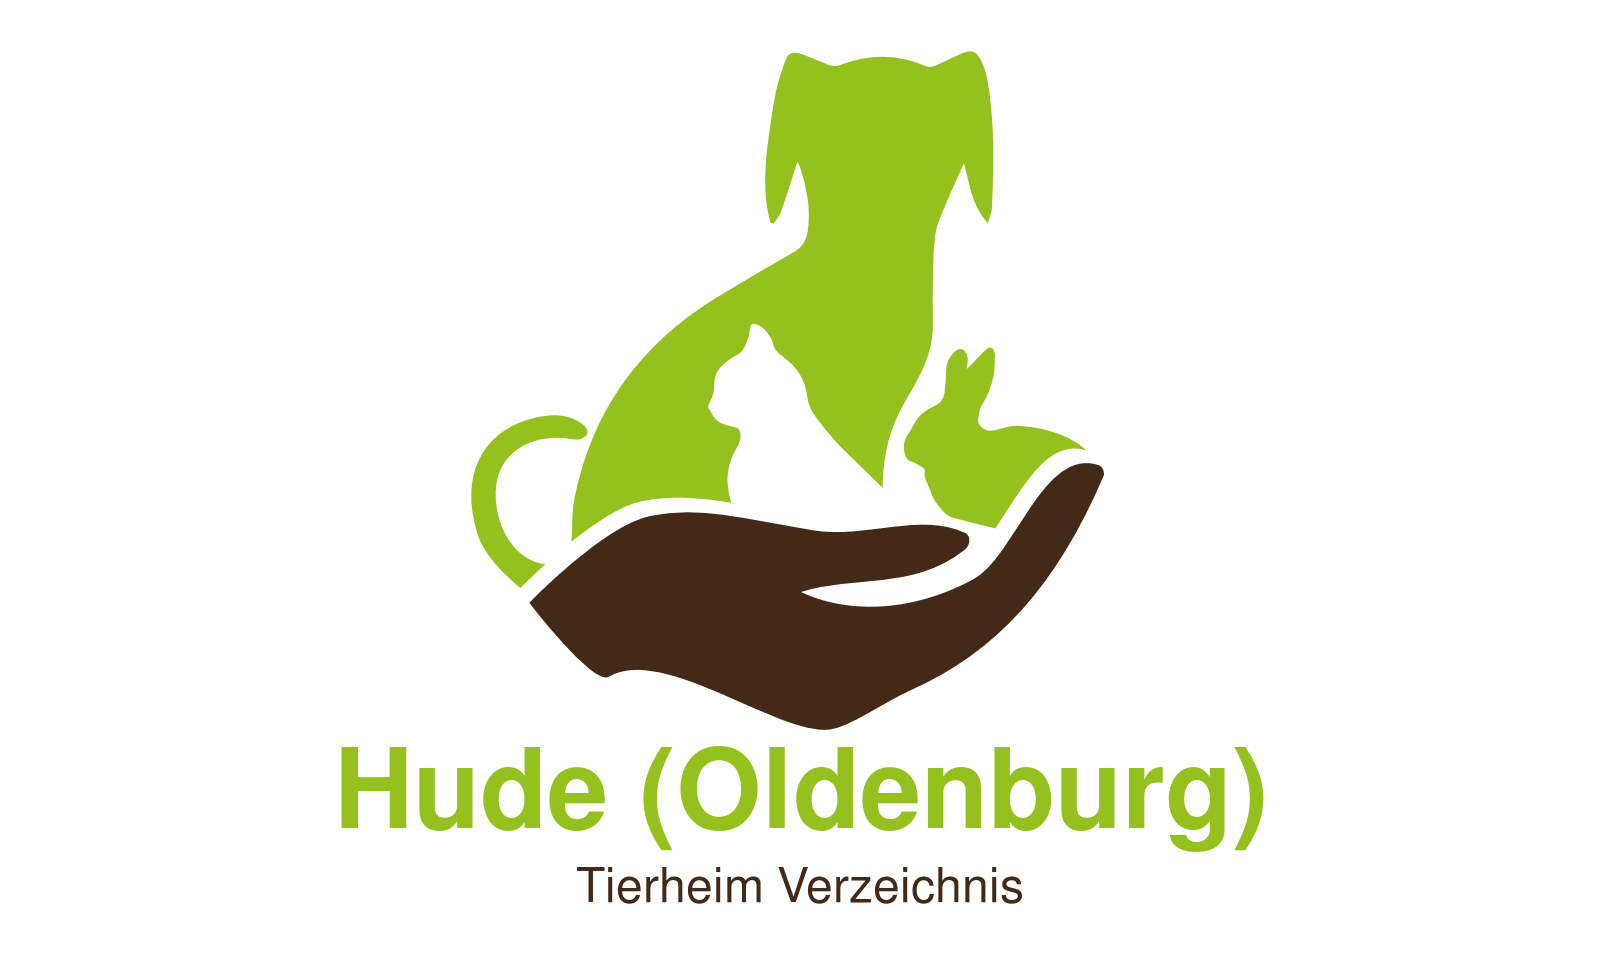 Tierheim Hude (Oldenburg)